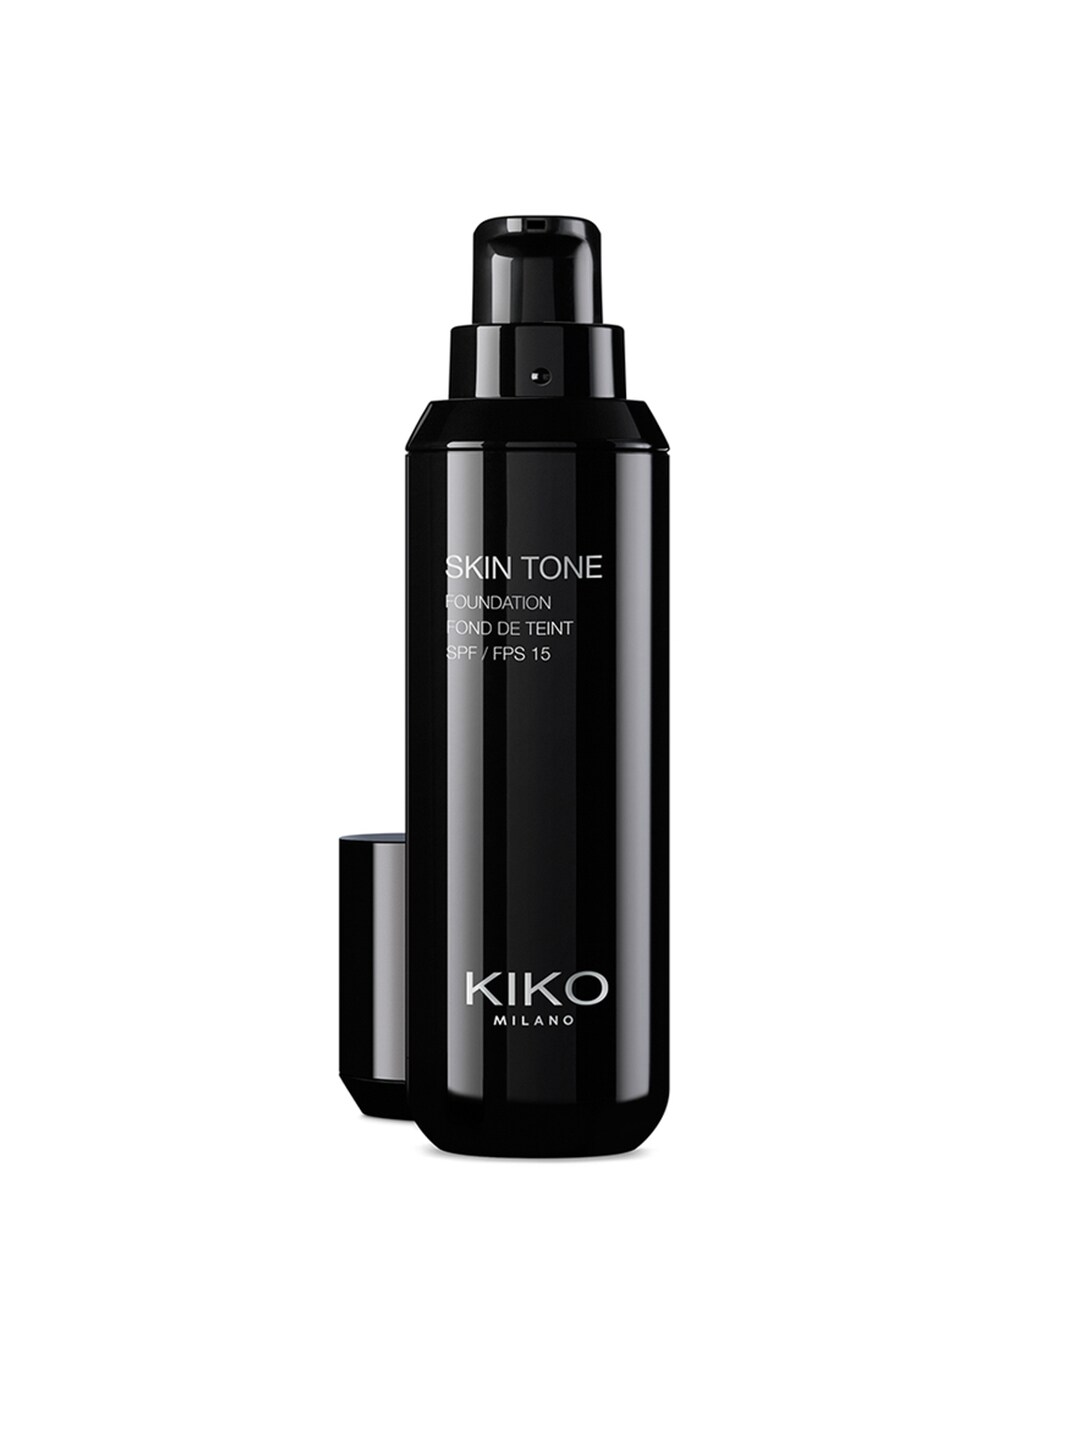 KIKO MILANO SPF 15 Skin Tone Foundation - Neutral 05 Price in India